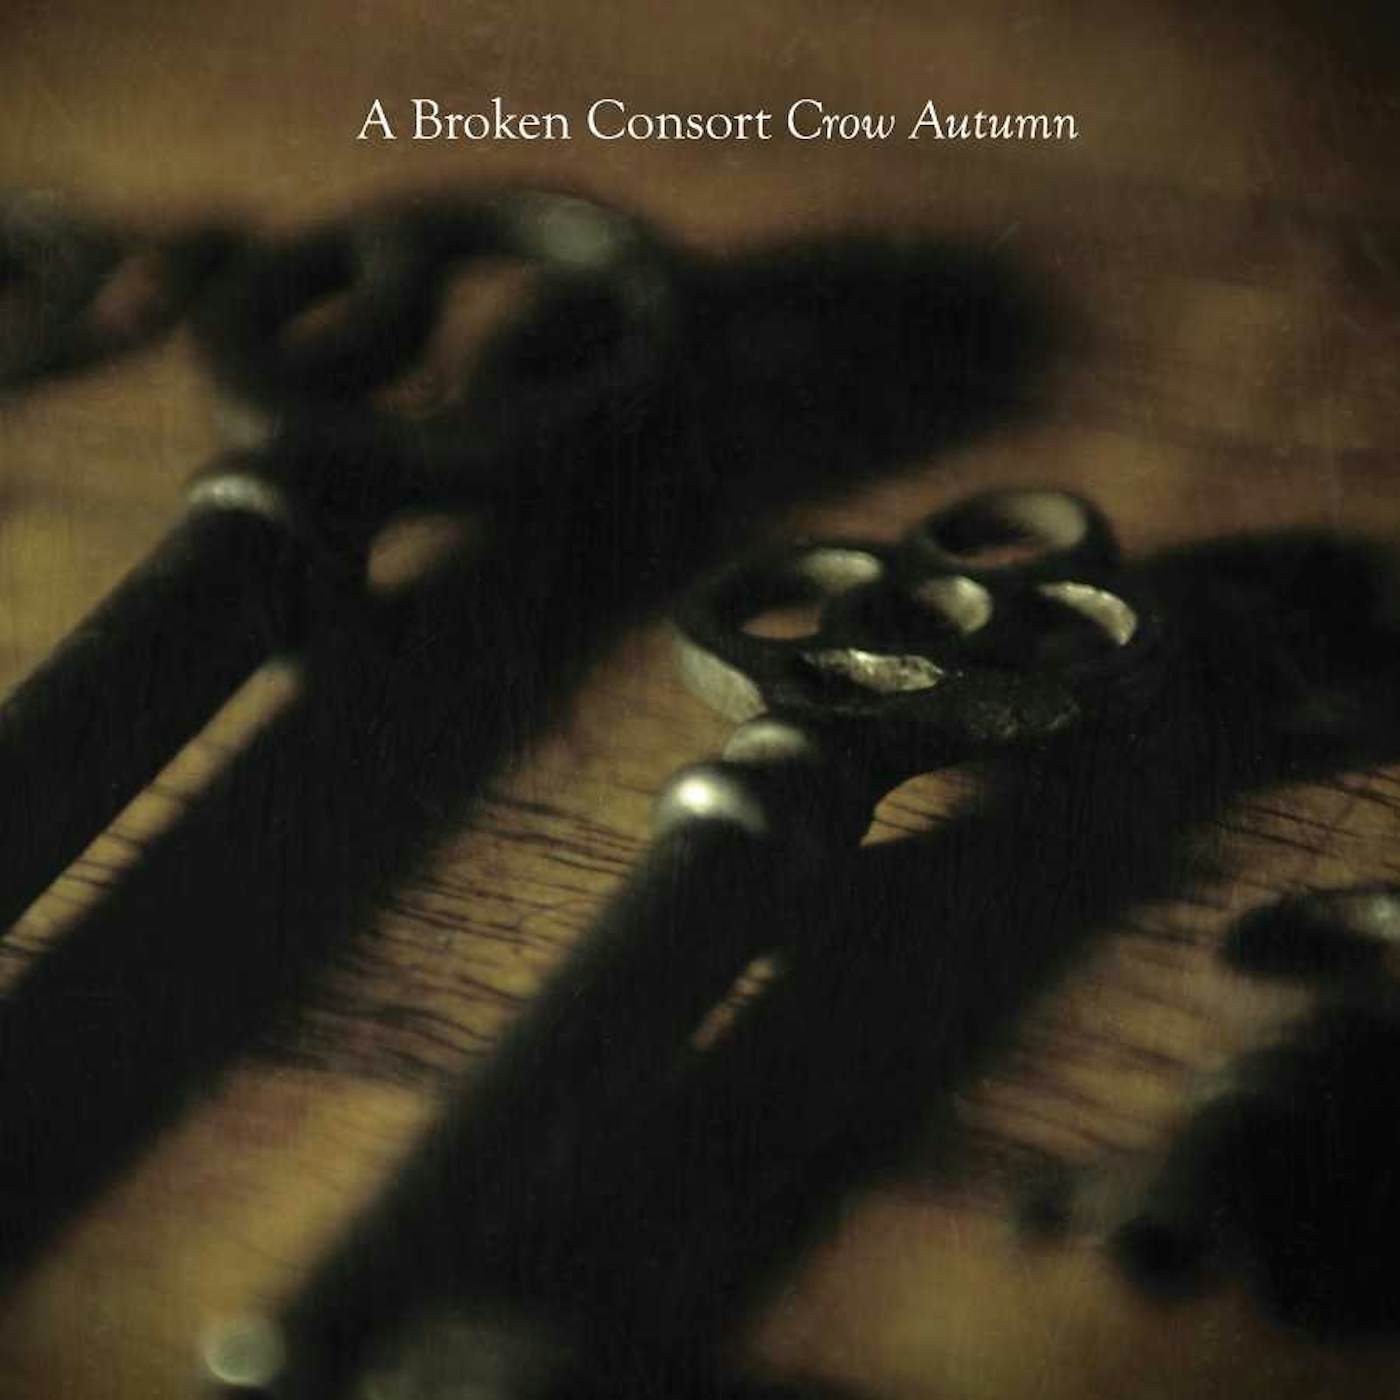 A Broken Consort Crow Autumn Vinyl Record